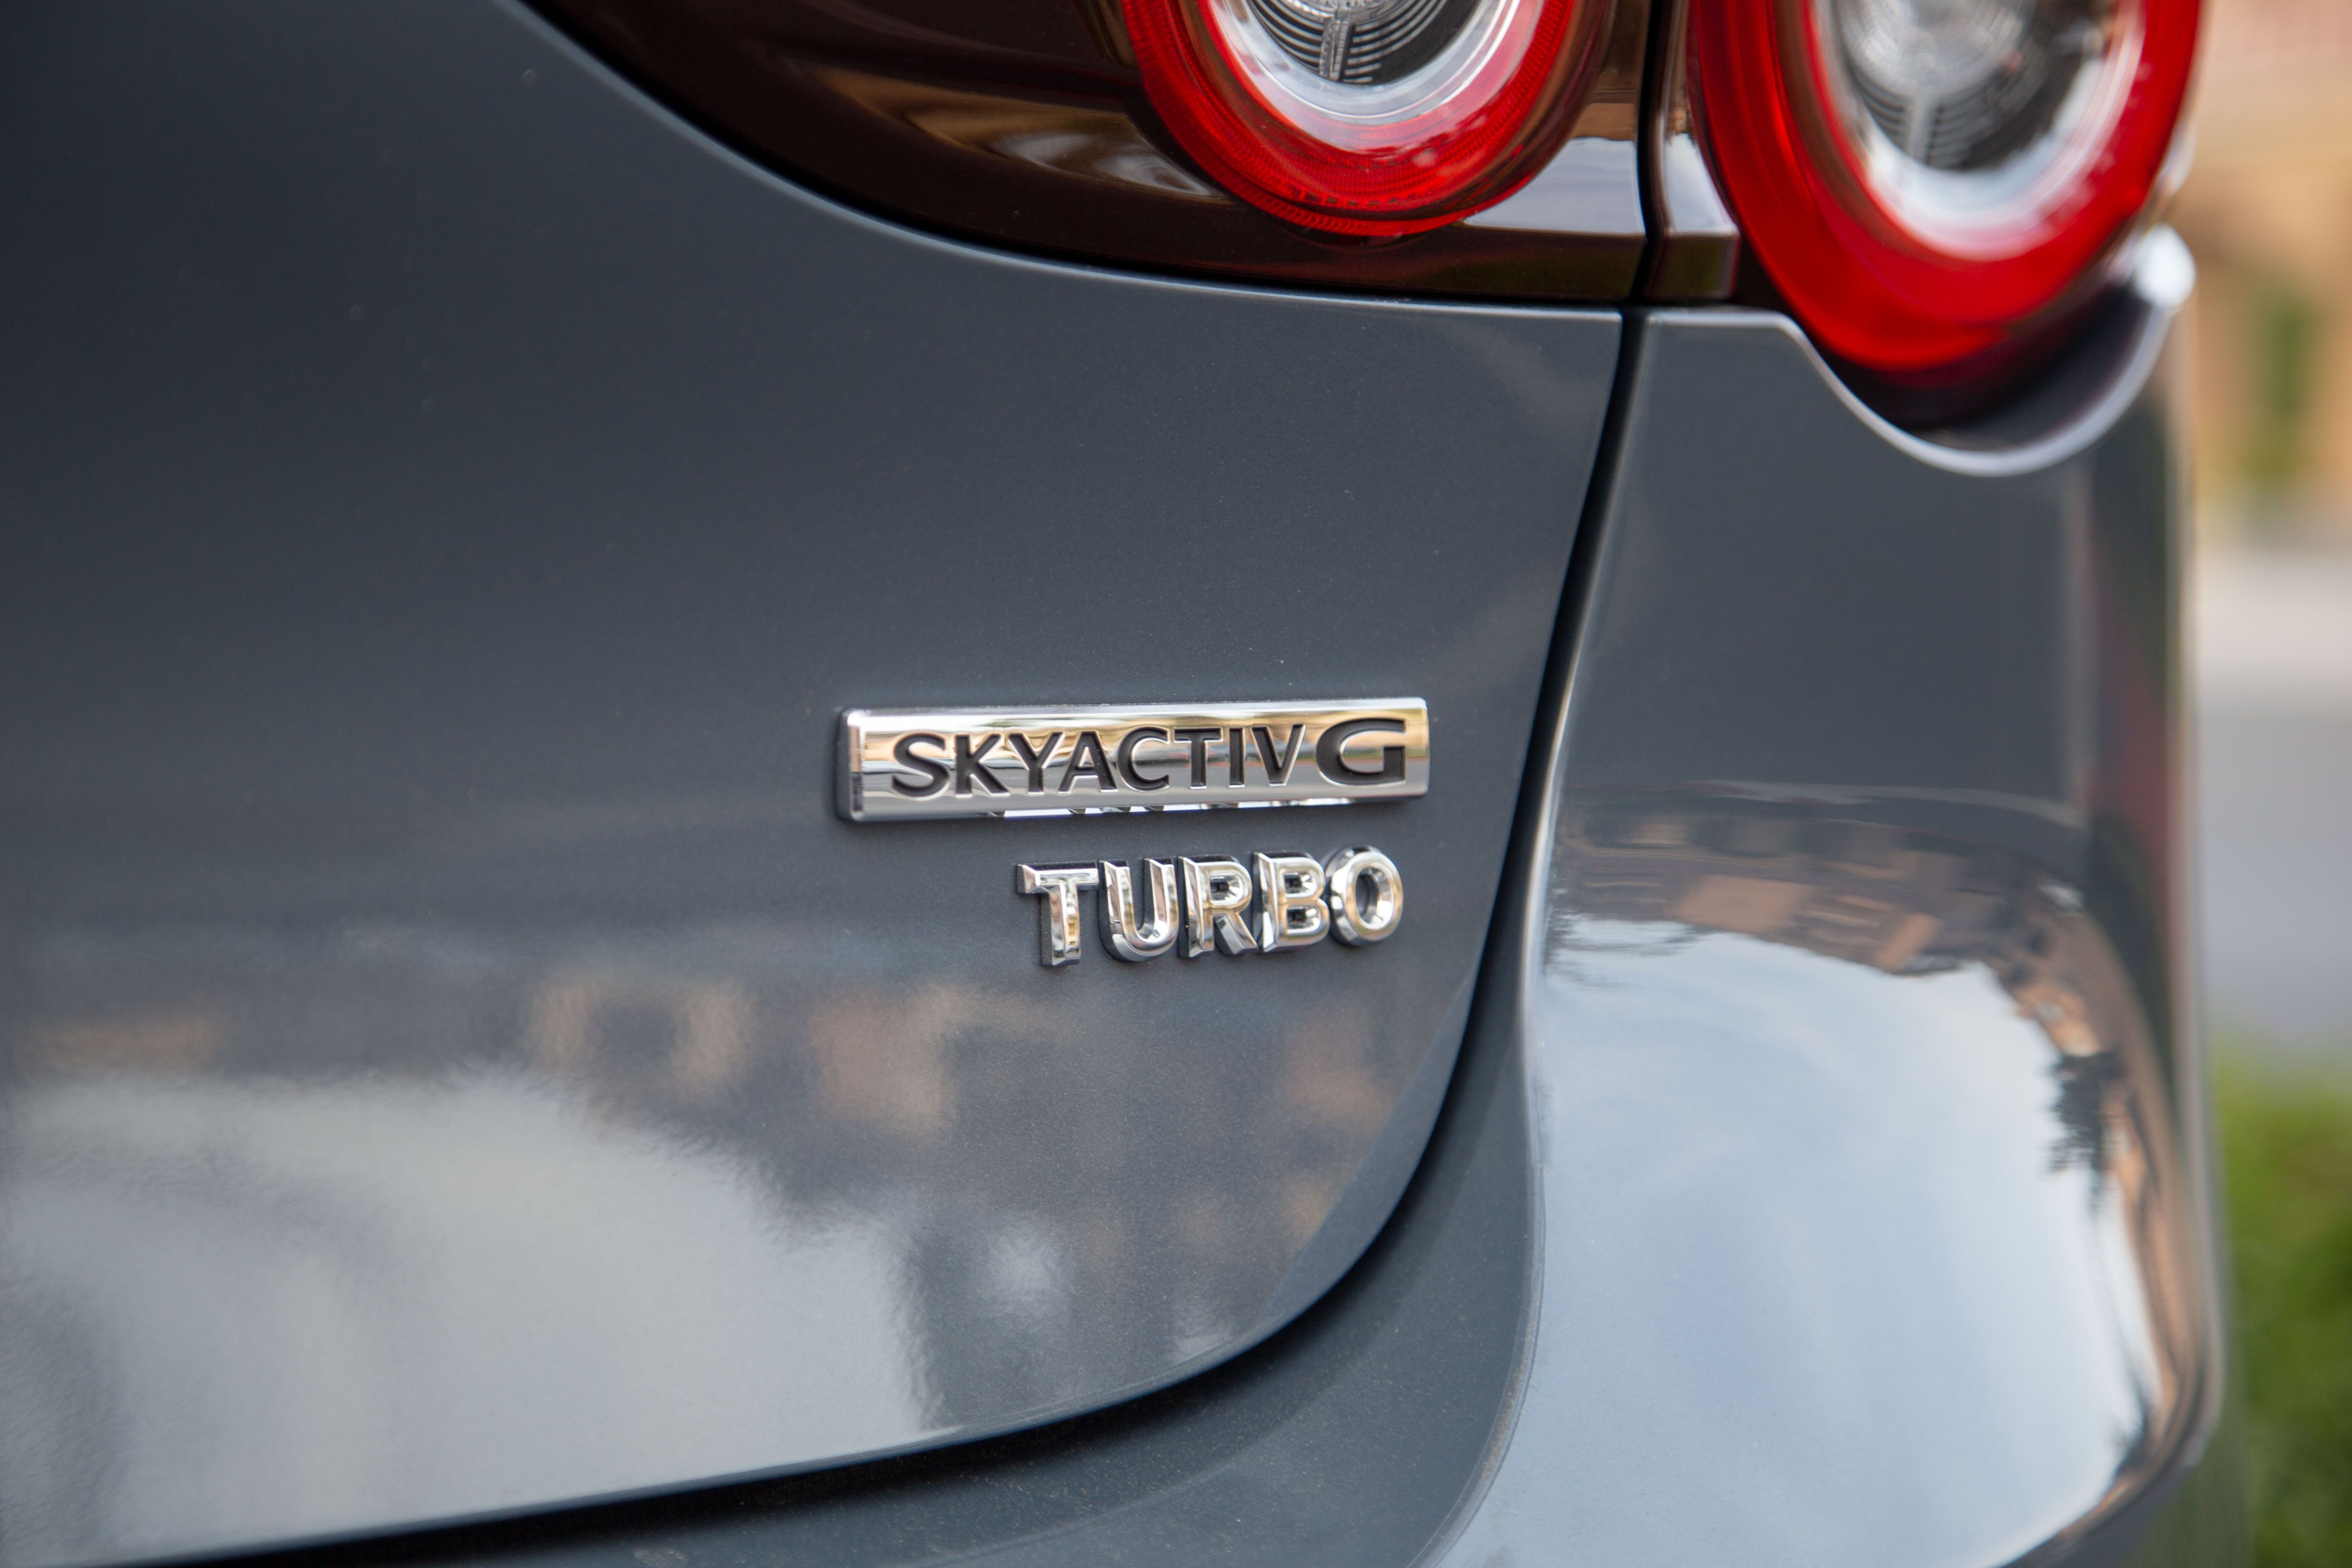 2022 Mazda3 2.5 Turbo AWD Hatchback Premium Plus Skyactiv Turbo Emblem